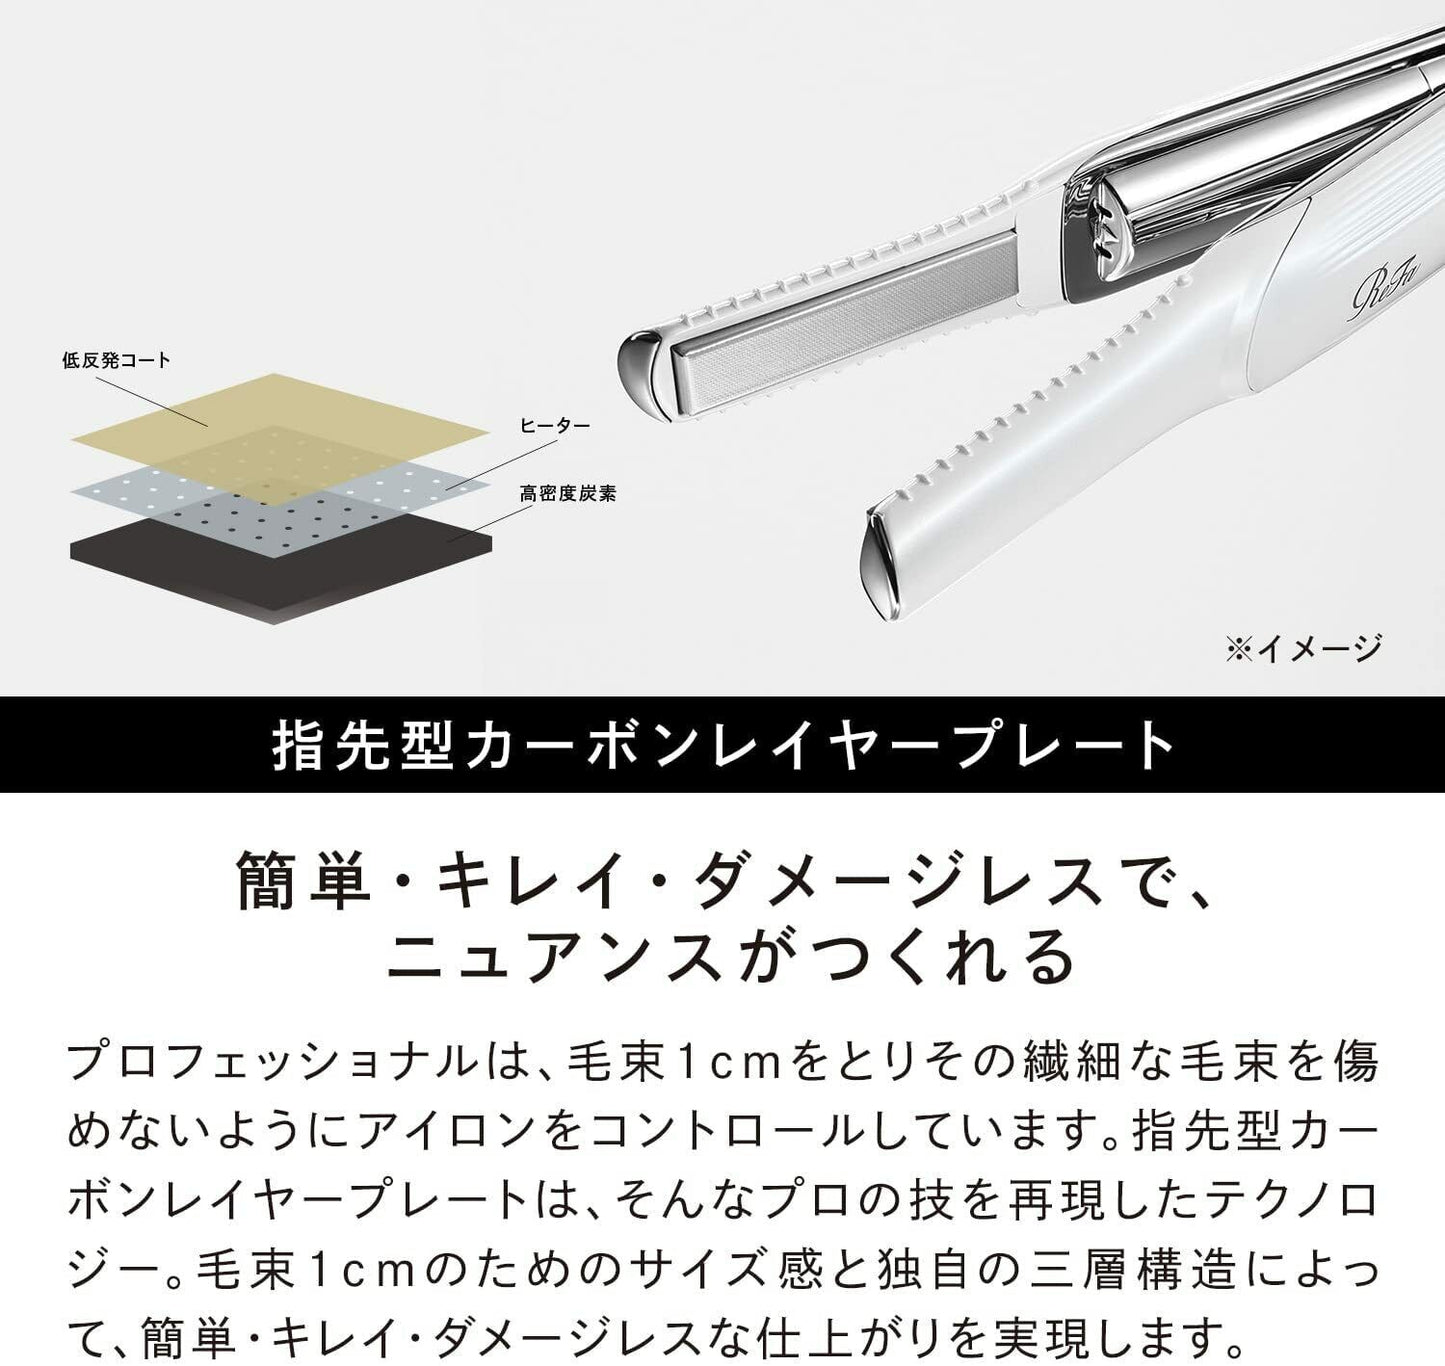 ReFa BEAUTECH FINGER IRON Cordless Portable USB Moist Beauty Hair Iron Japan